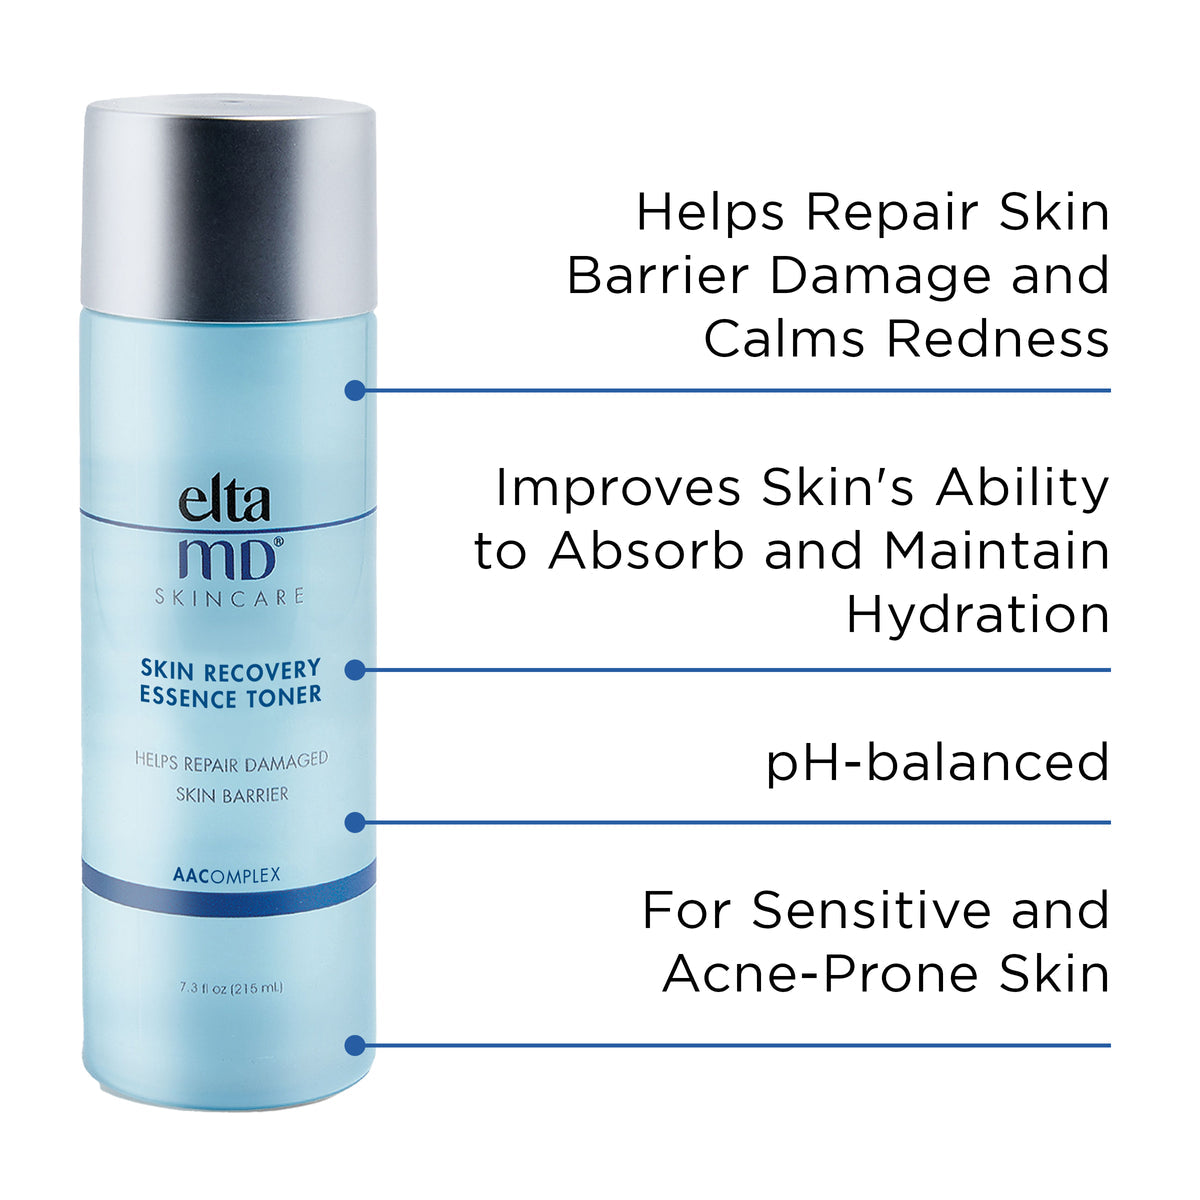 EltaMD Skin Recovery Essence Toner